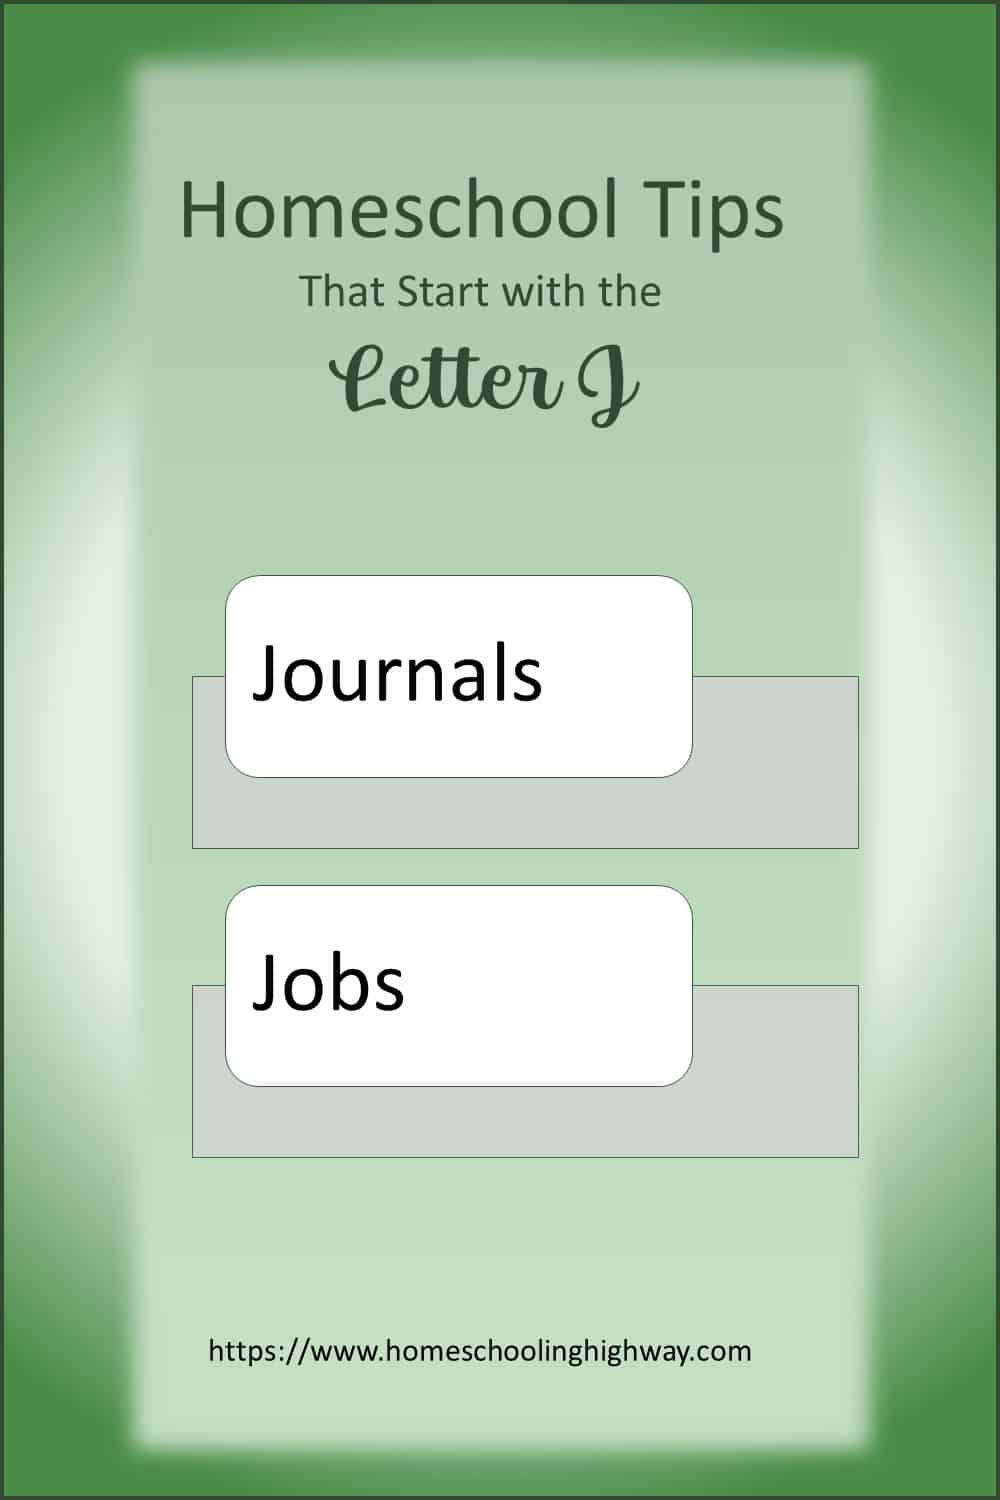 Homeschooling Tips That Start With J. Journals, Jobs.